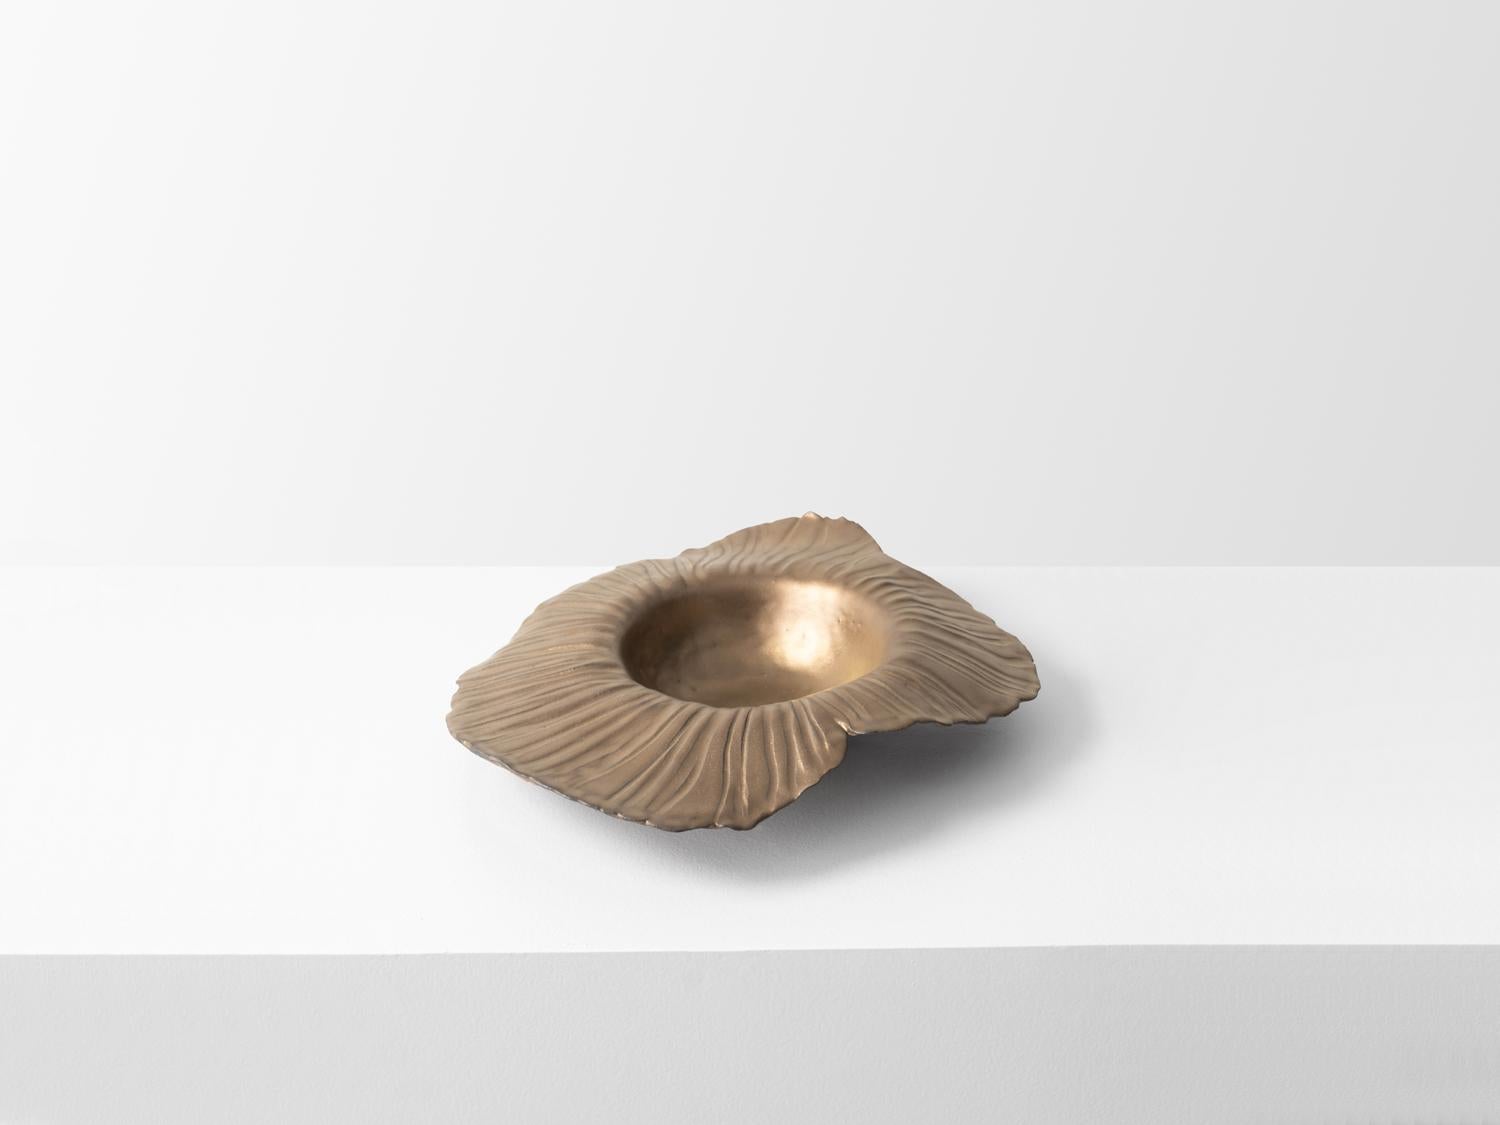 Trish DeMasi
Nymph bowl, 2022
Metallic glazed stoneware
Measures: 2.5 x 12.25 x 11.5 in.